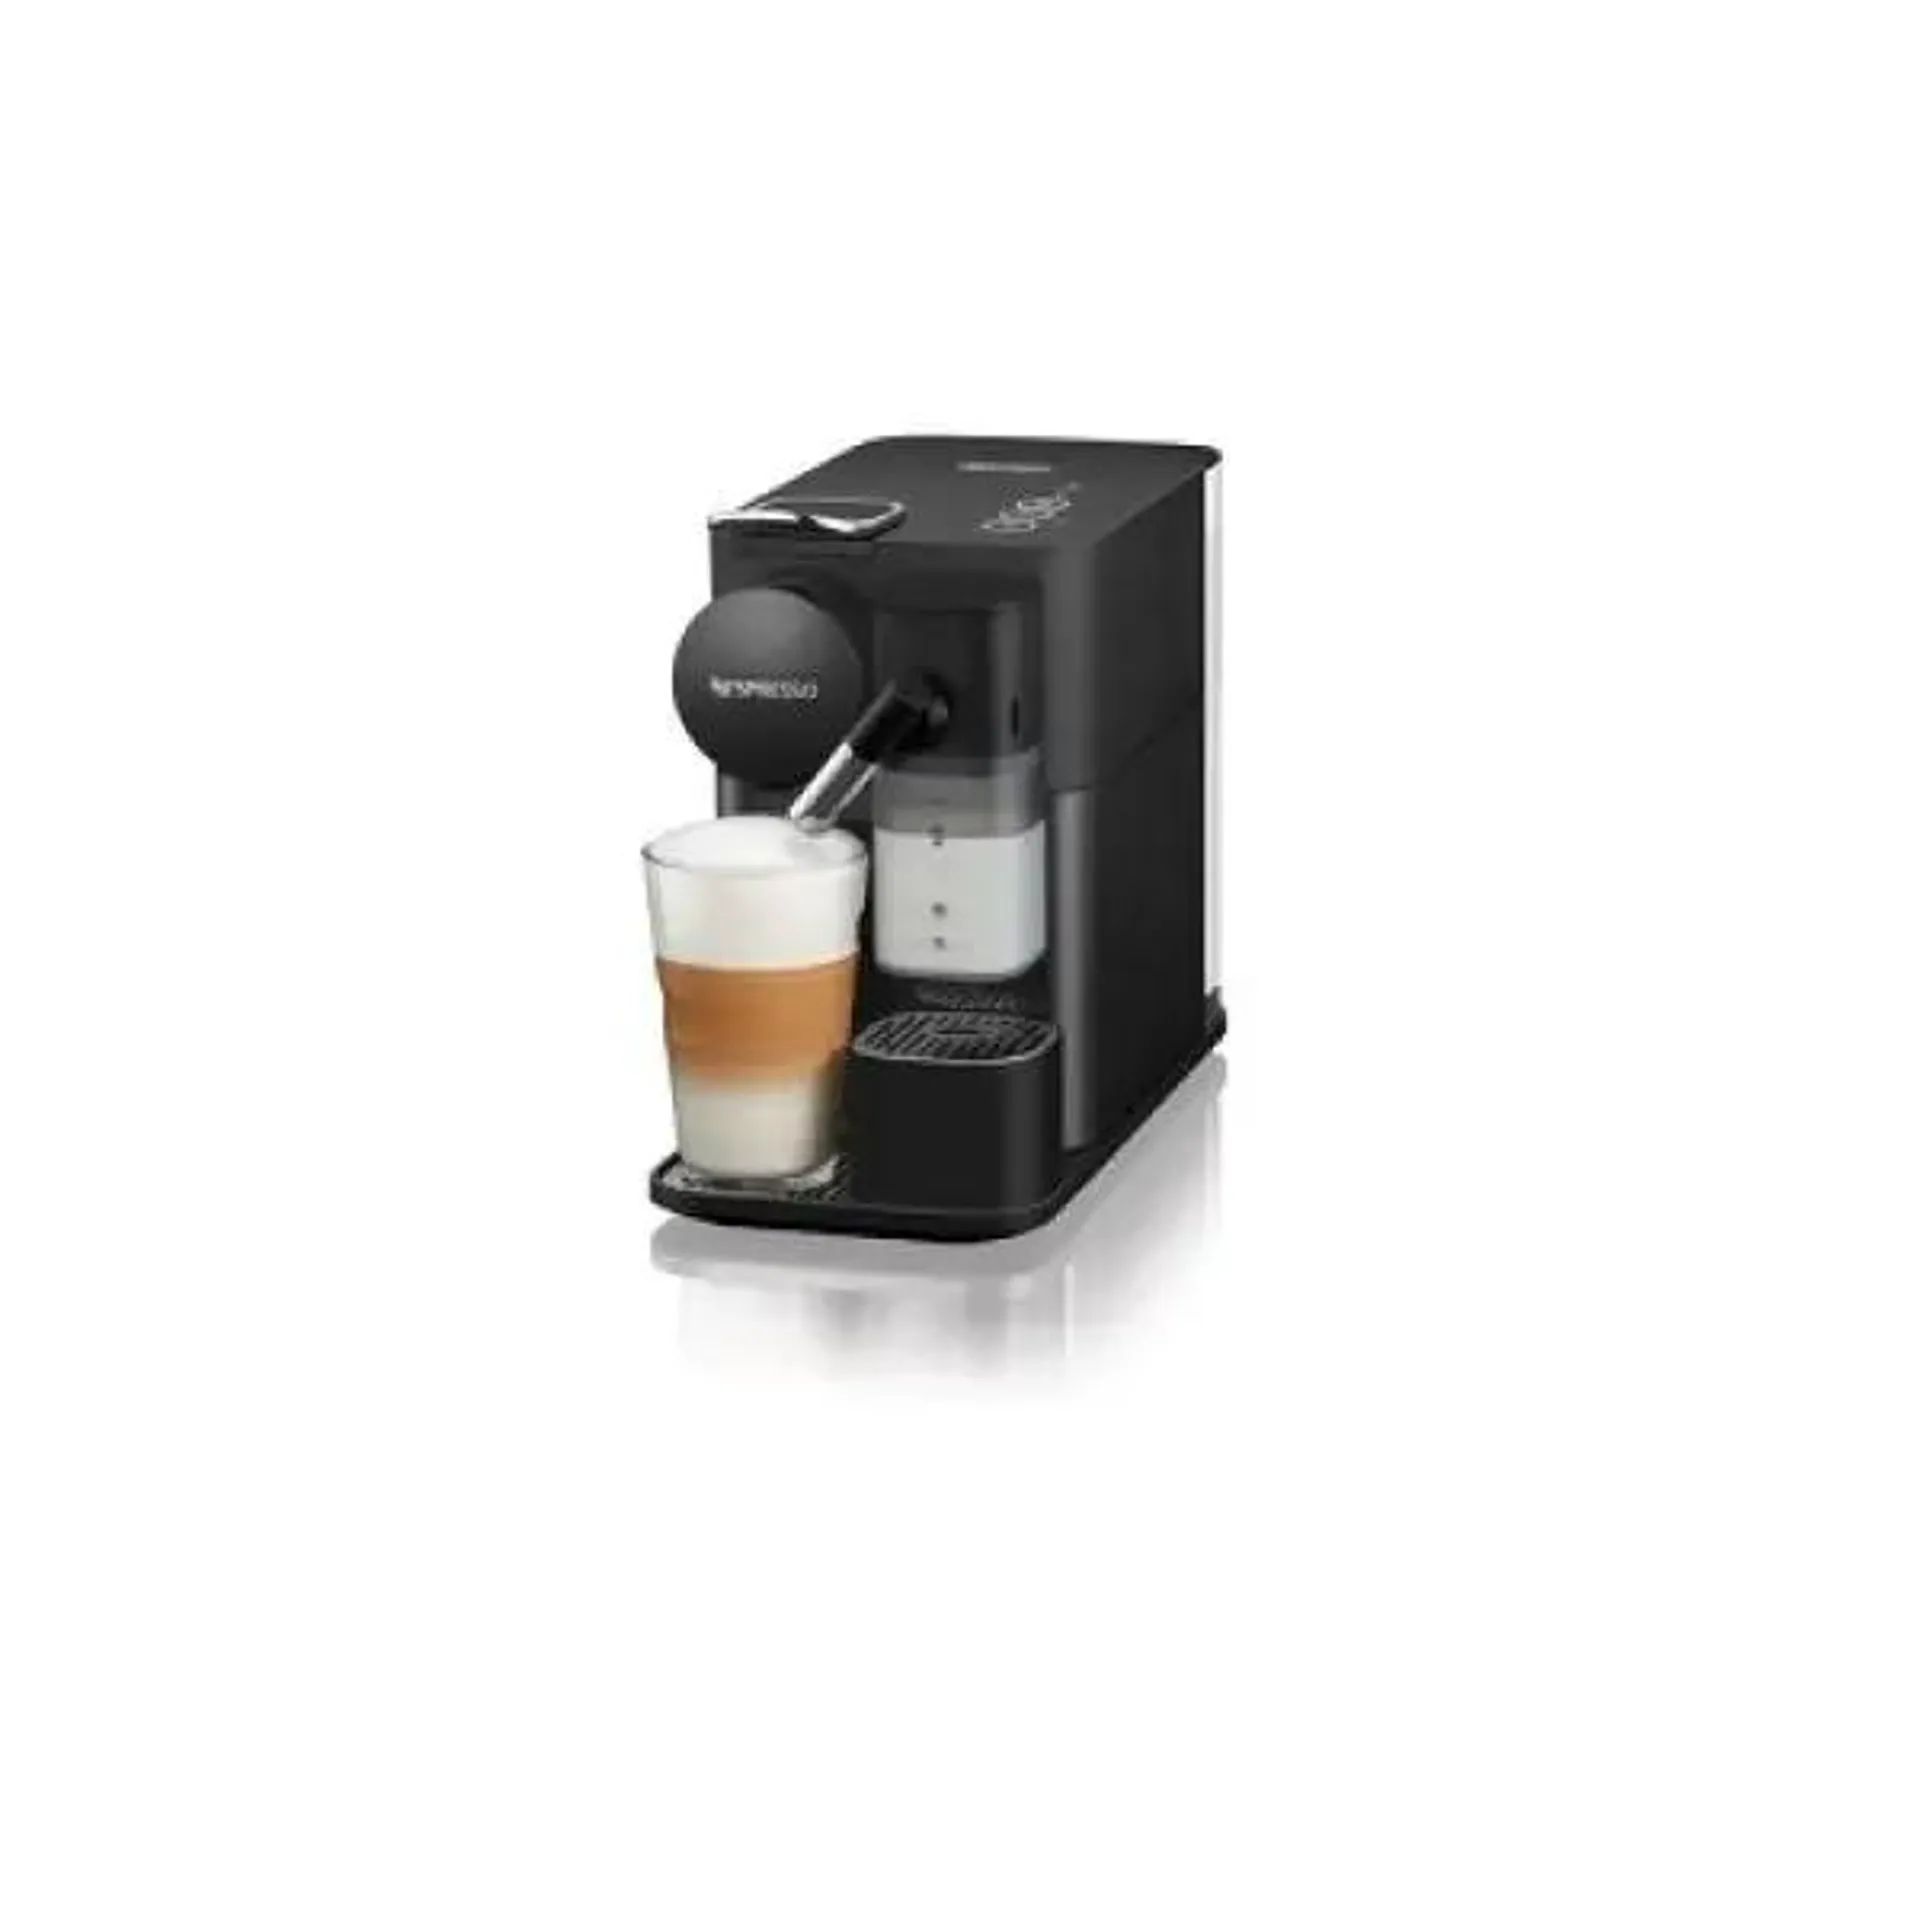 DeLonghi Nespresso Lattissima Nespresso Coffee Machine Black